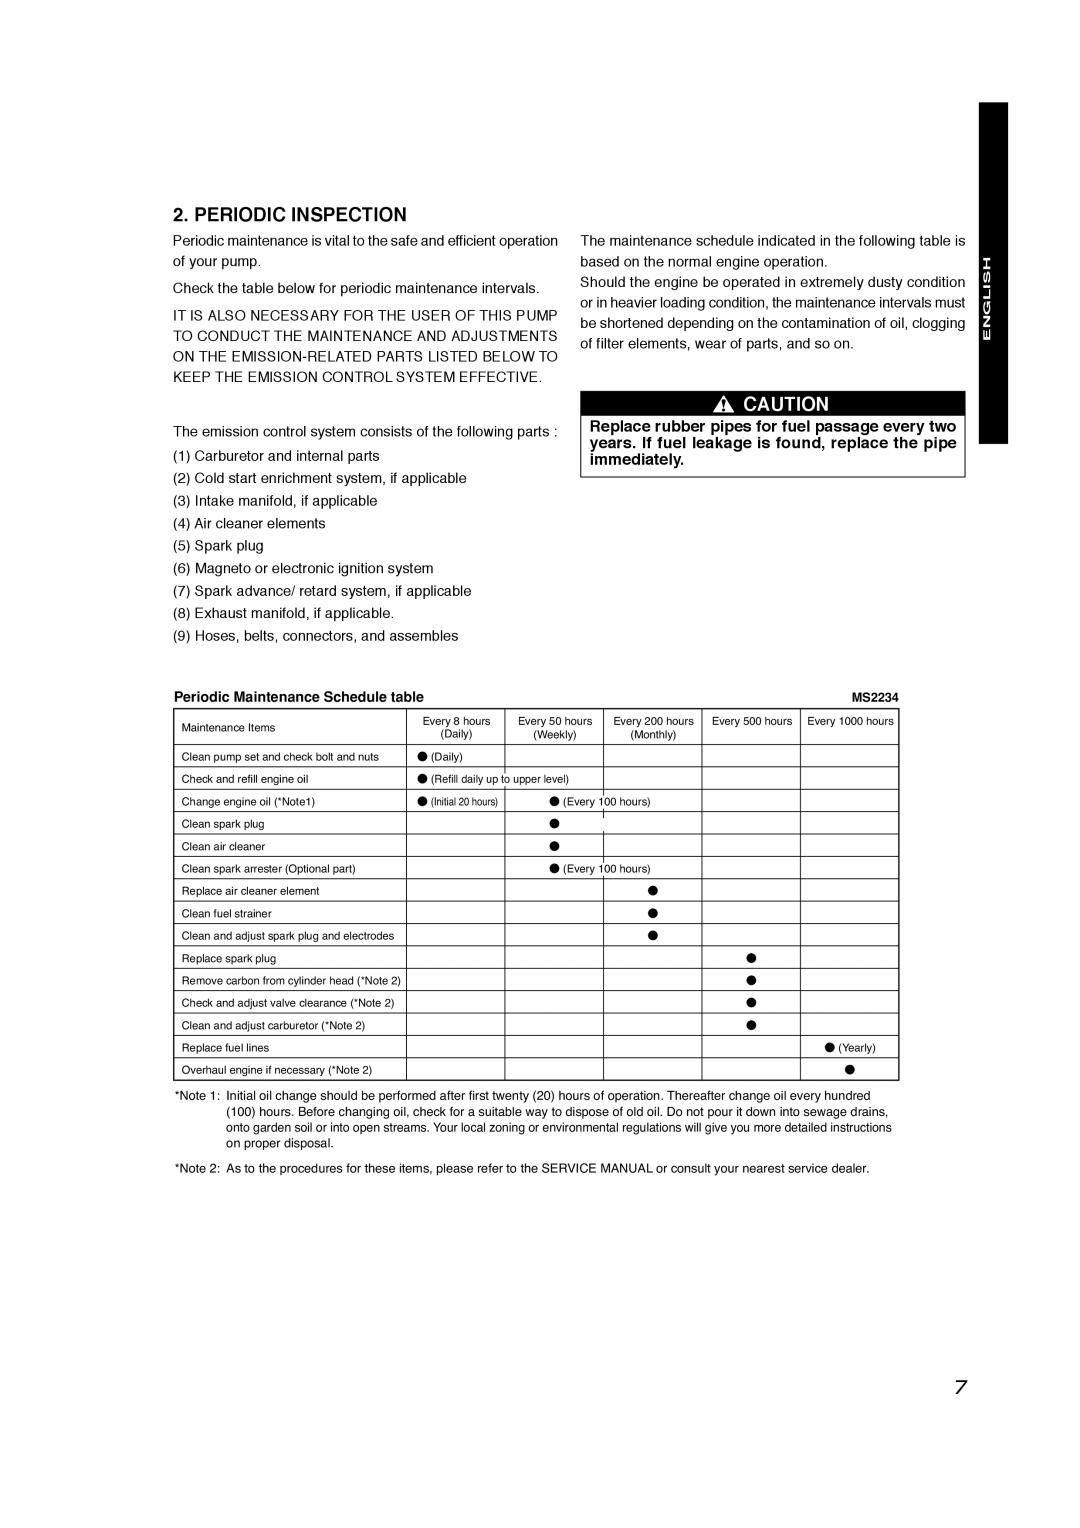 Subaru Robin Power Products PKV401T Periodic Inspection, Française, English, Español, Periodic Maintenance Schedule table 